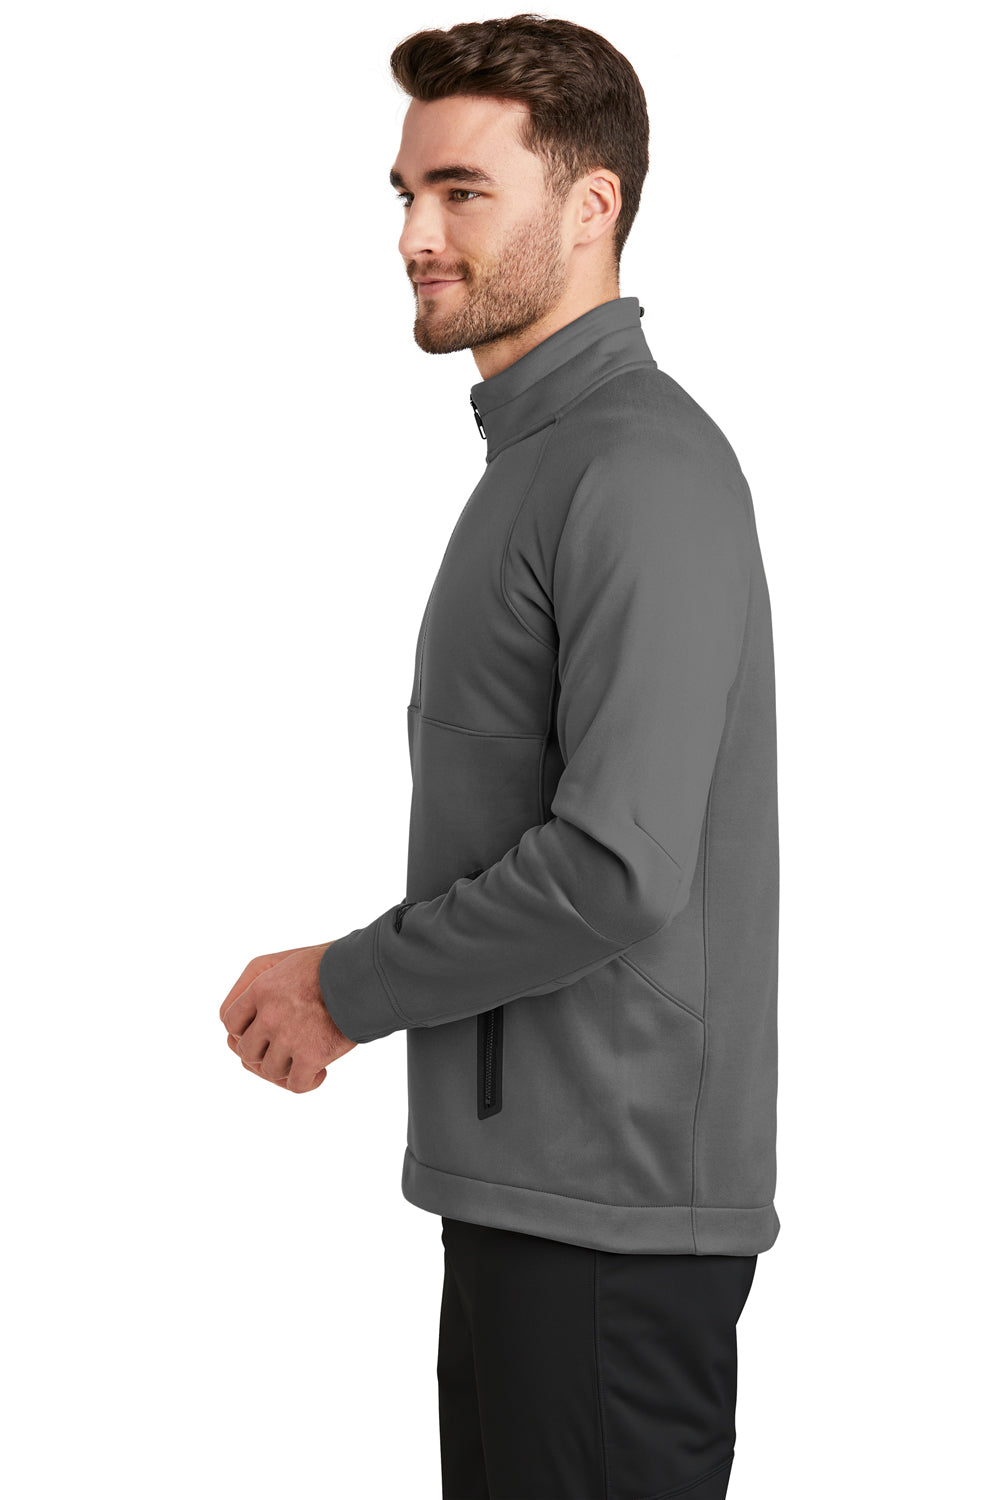 New Era NEA523 Mens Venue Moisture Wicking Fleece 1/4 Zip Sweatshirt Graphite Grey Side